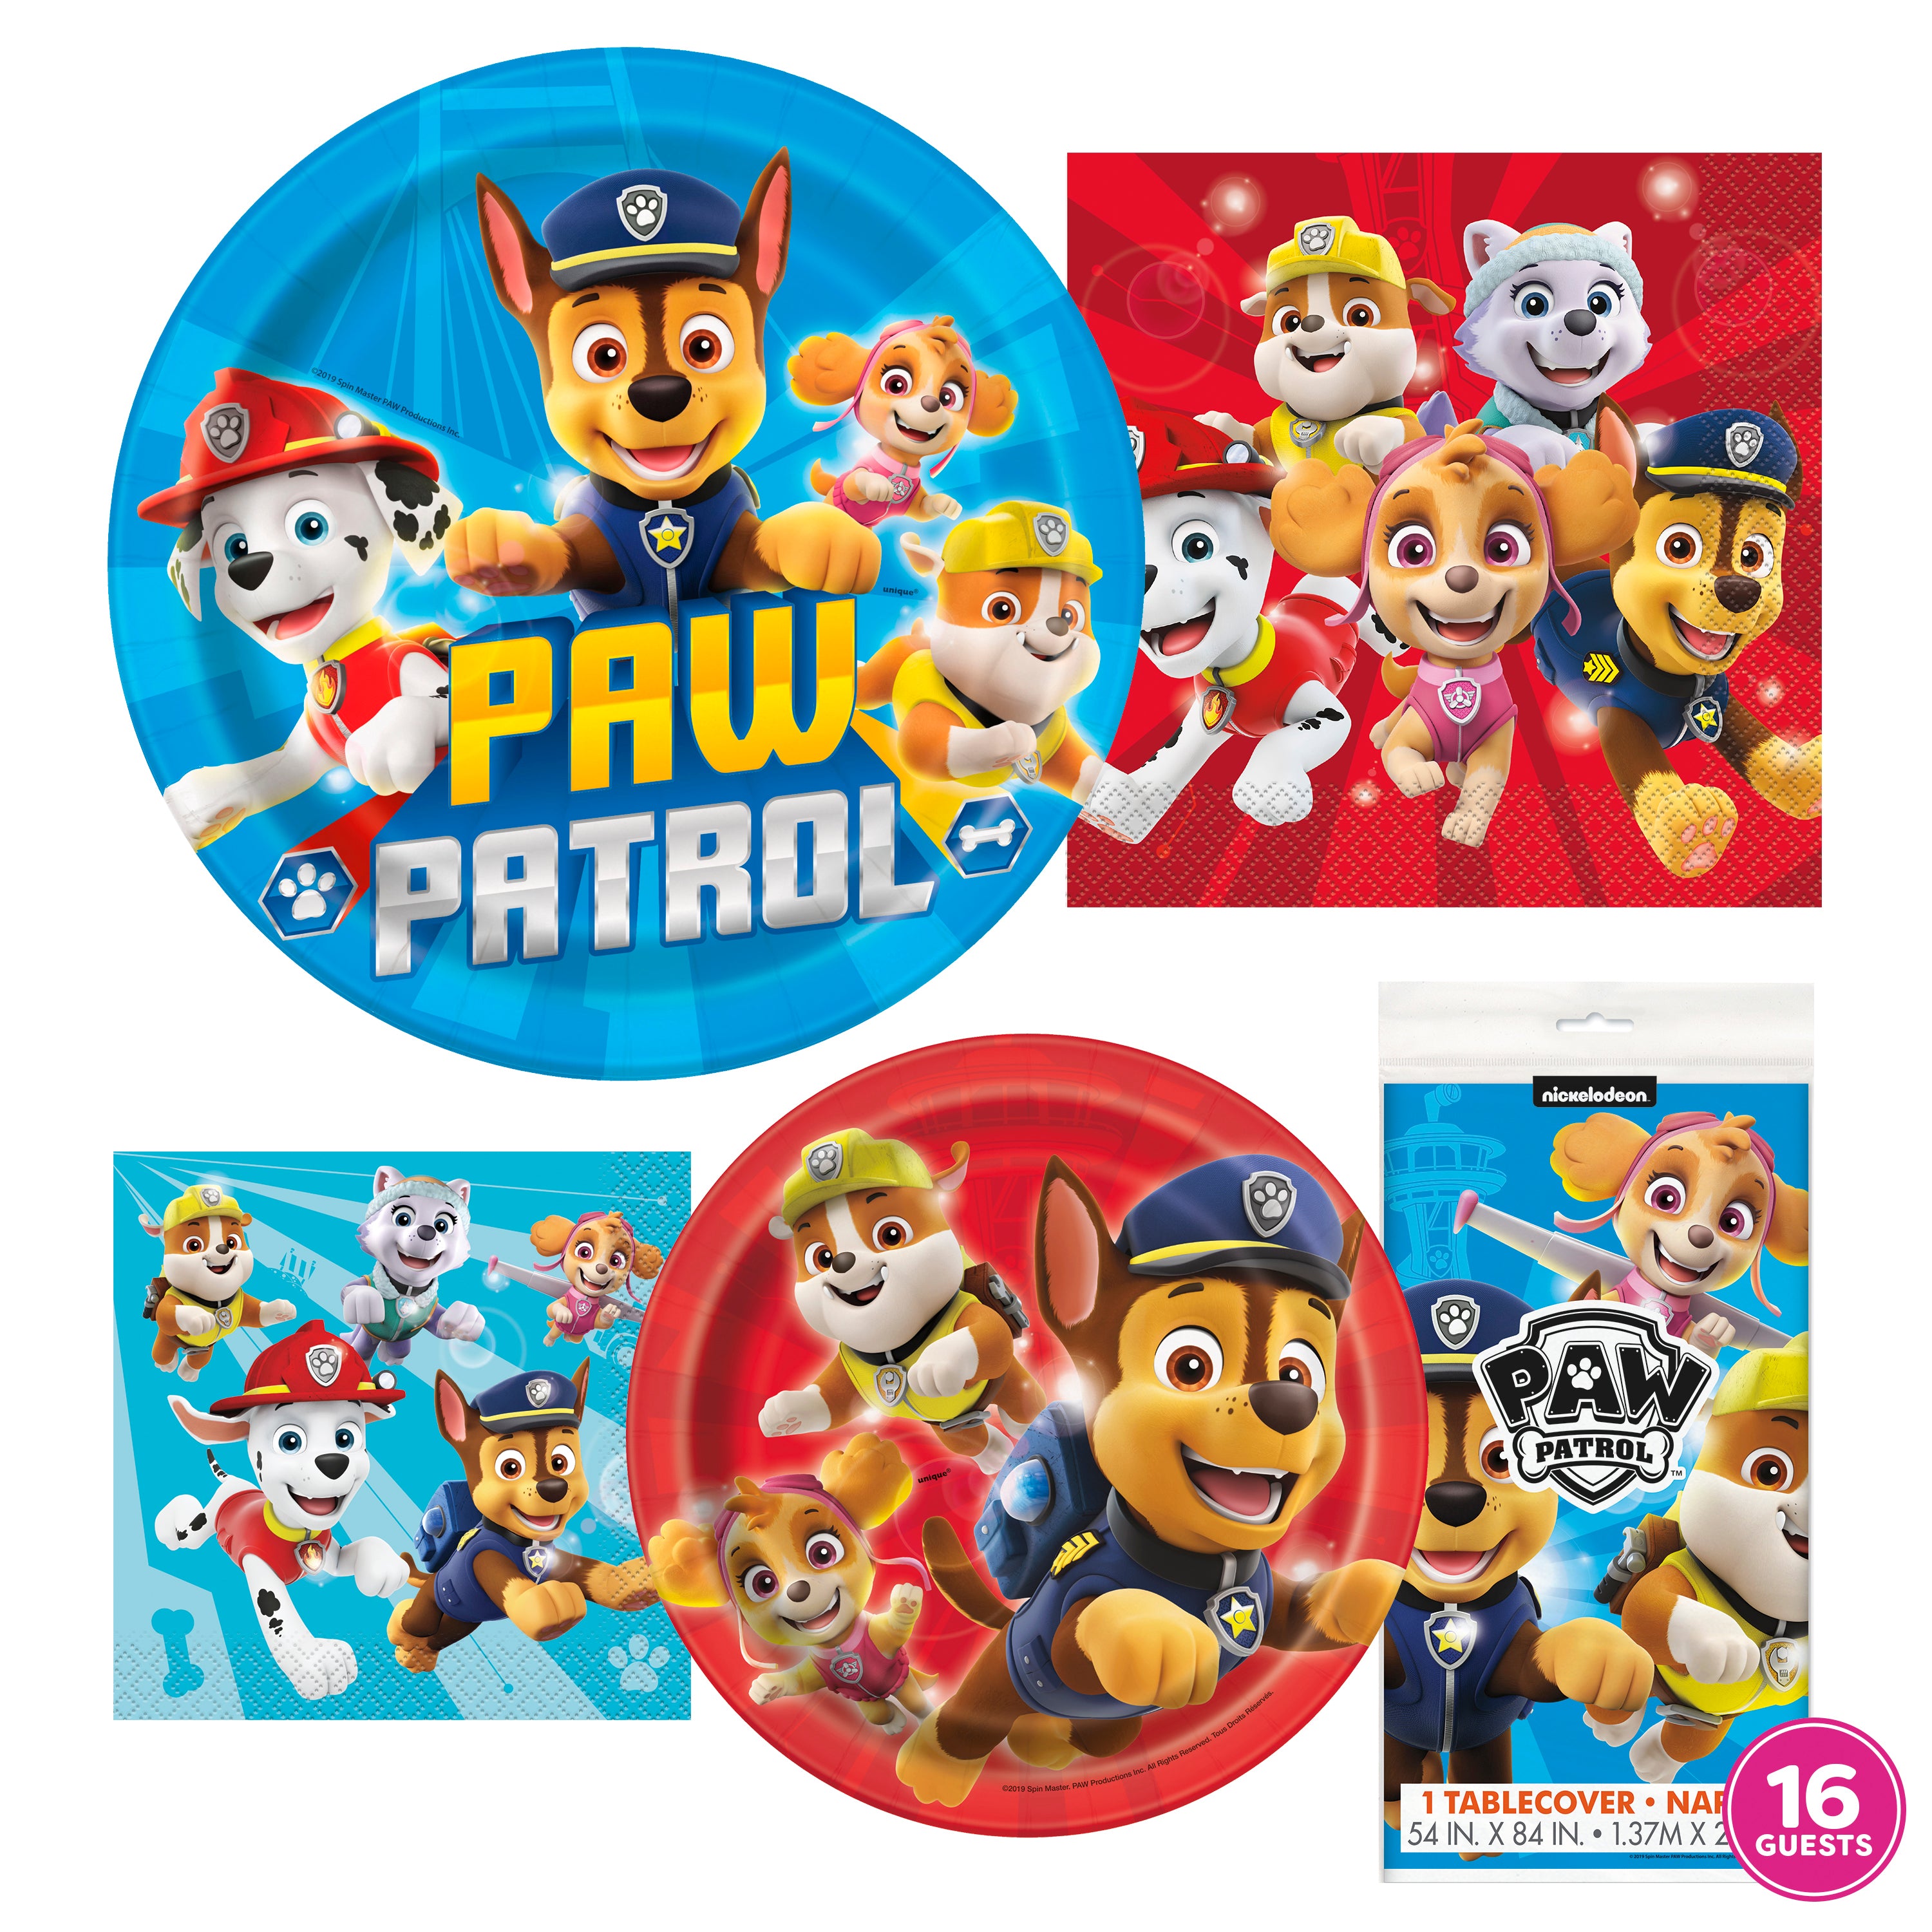 Nickelodeon’s Paw Patrol Party Kit